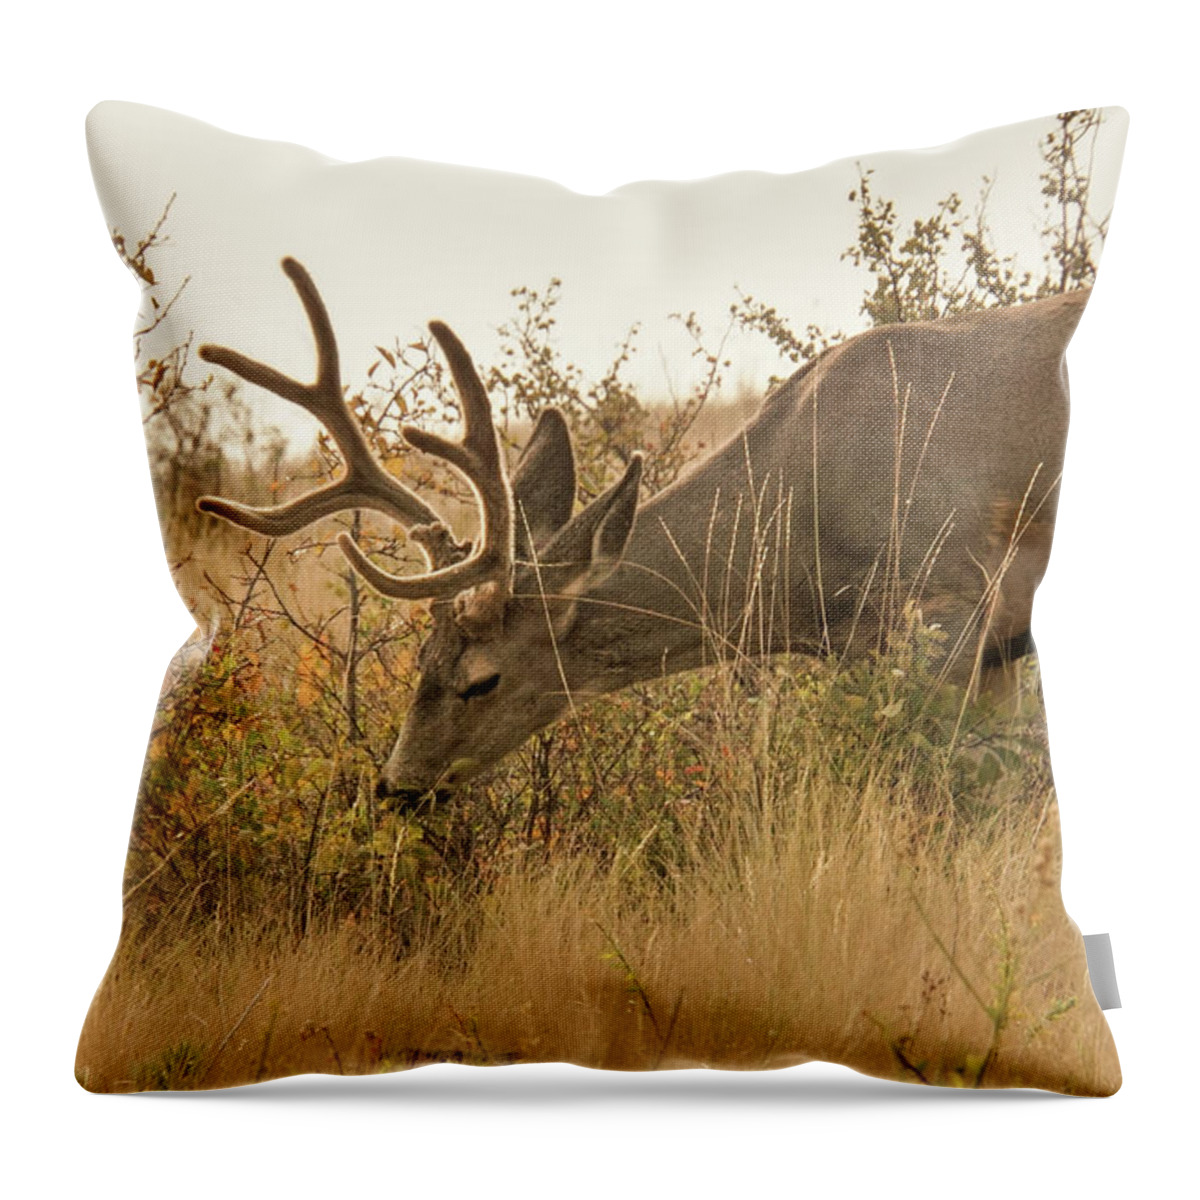 Montana Throw Pillow featuring the photograph Mule Deer Grazing Shrubs by Nancy Gleason